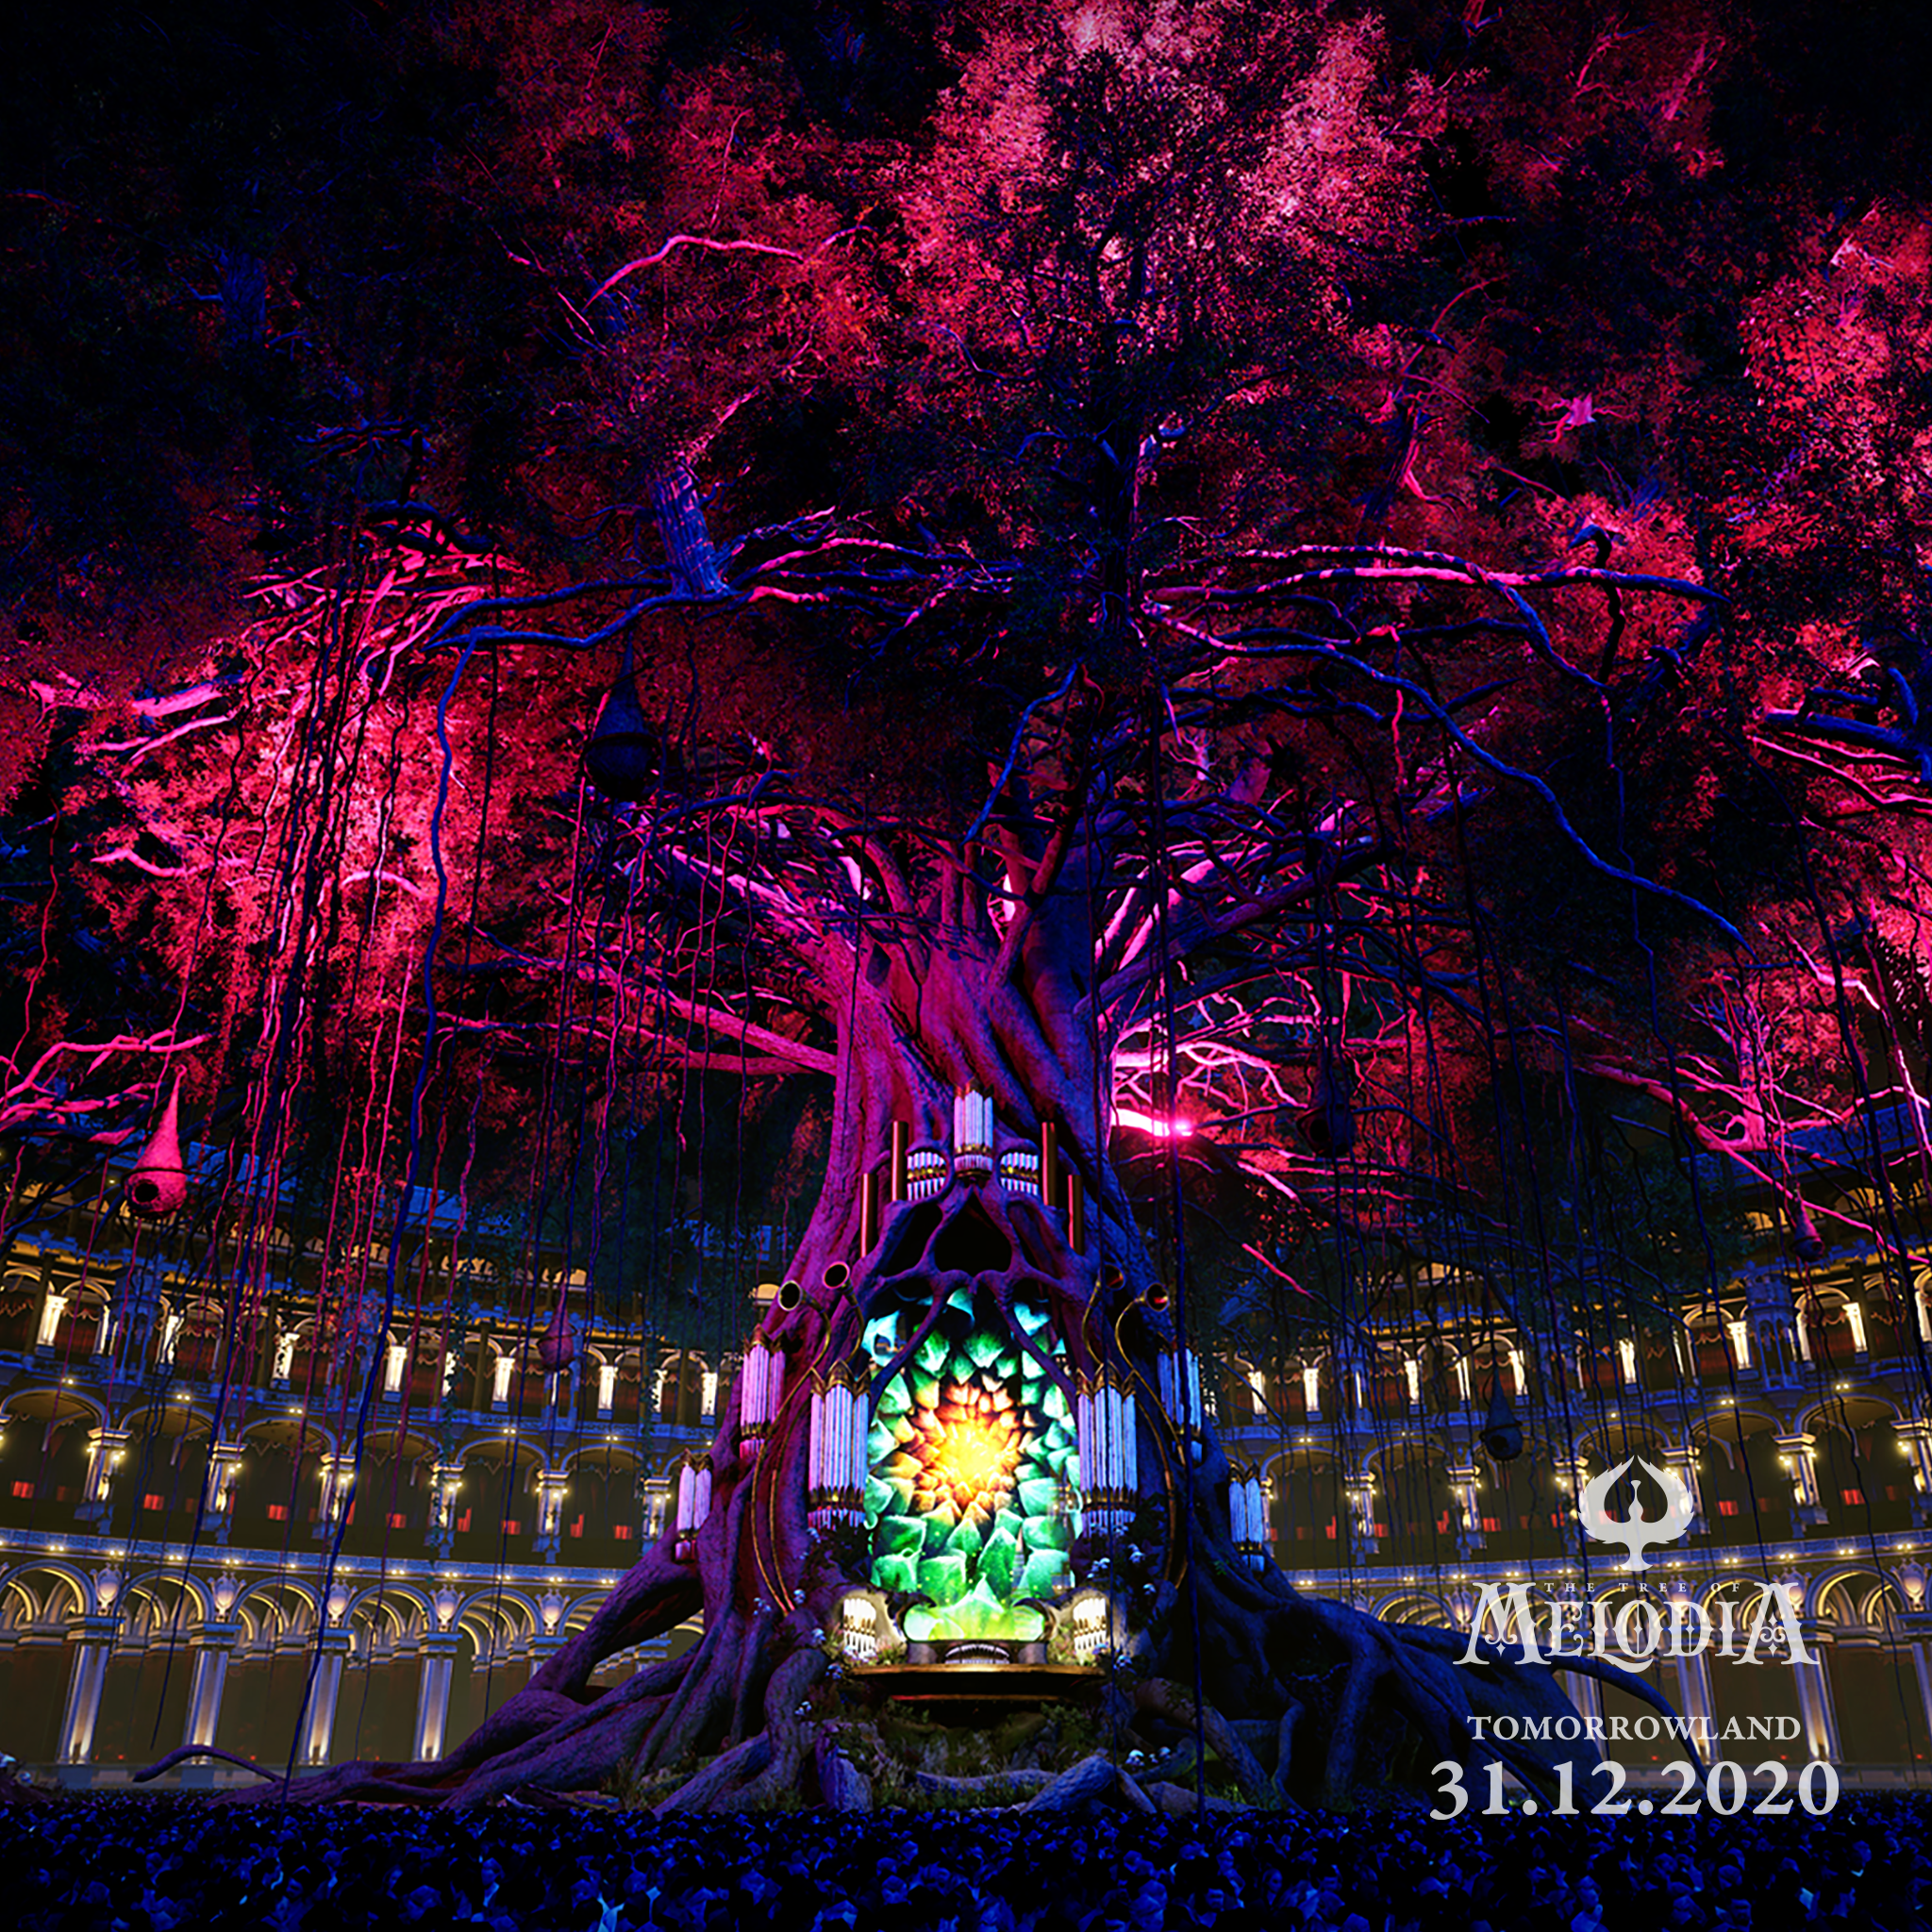 Escenario Melodia Tomorrowland 31.1.2020